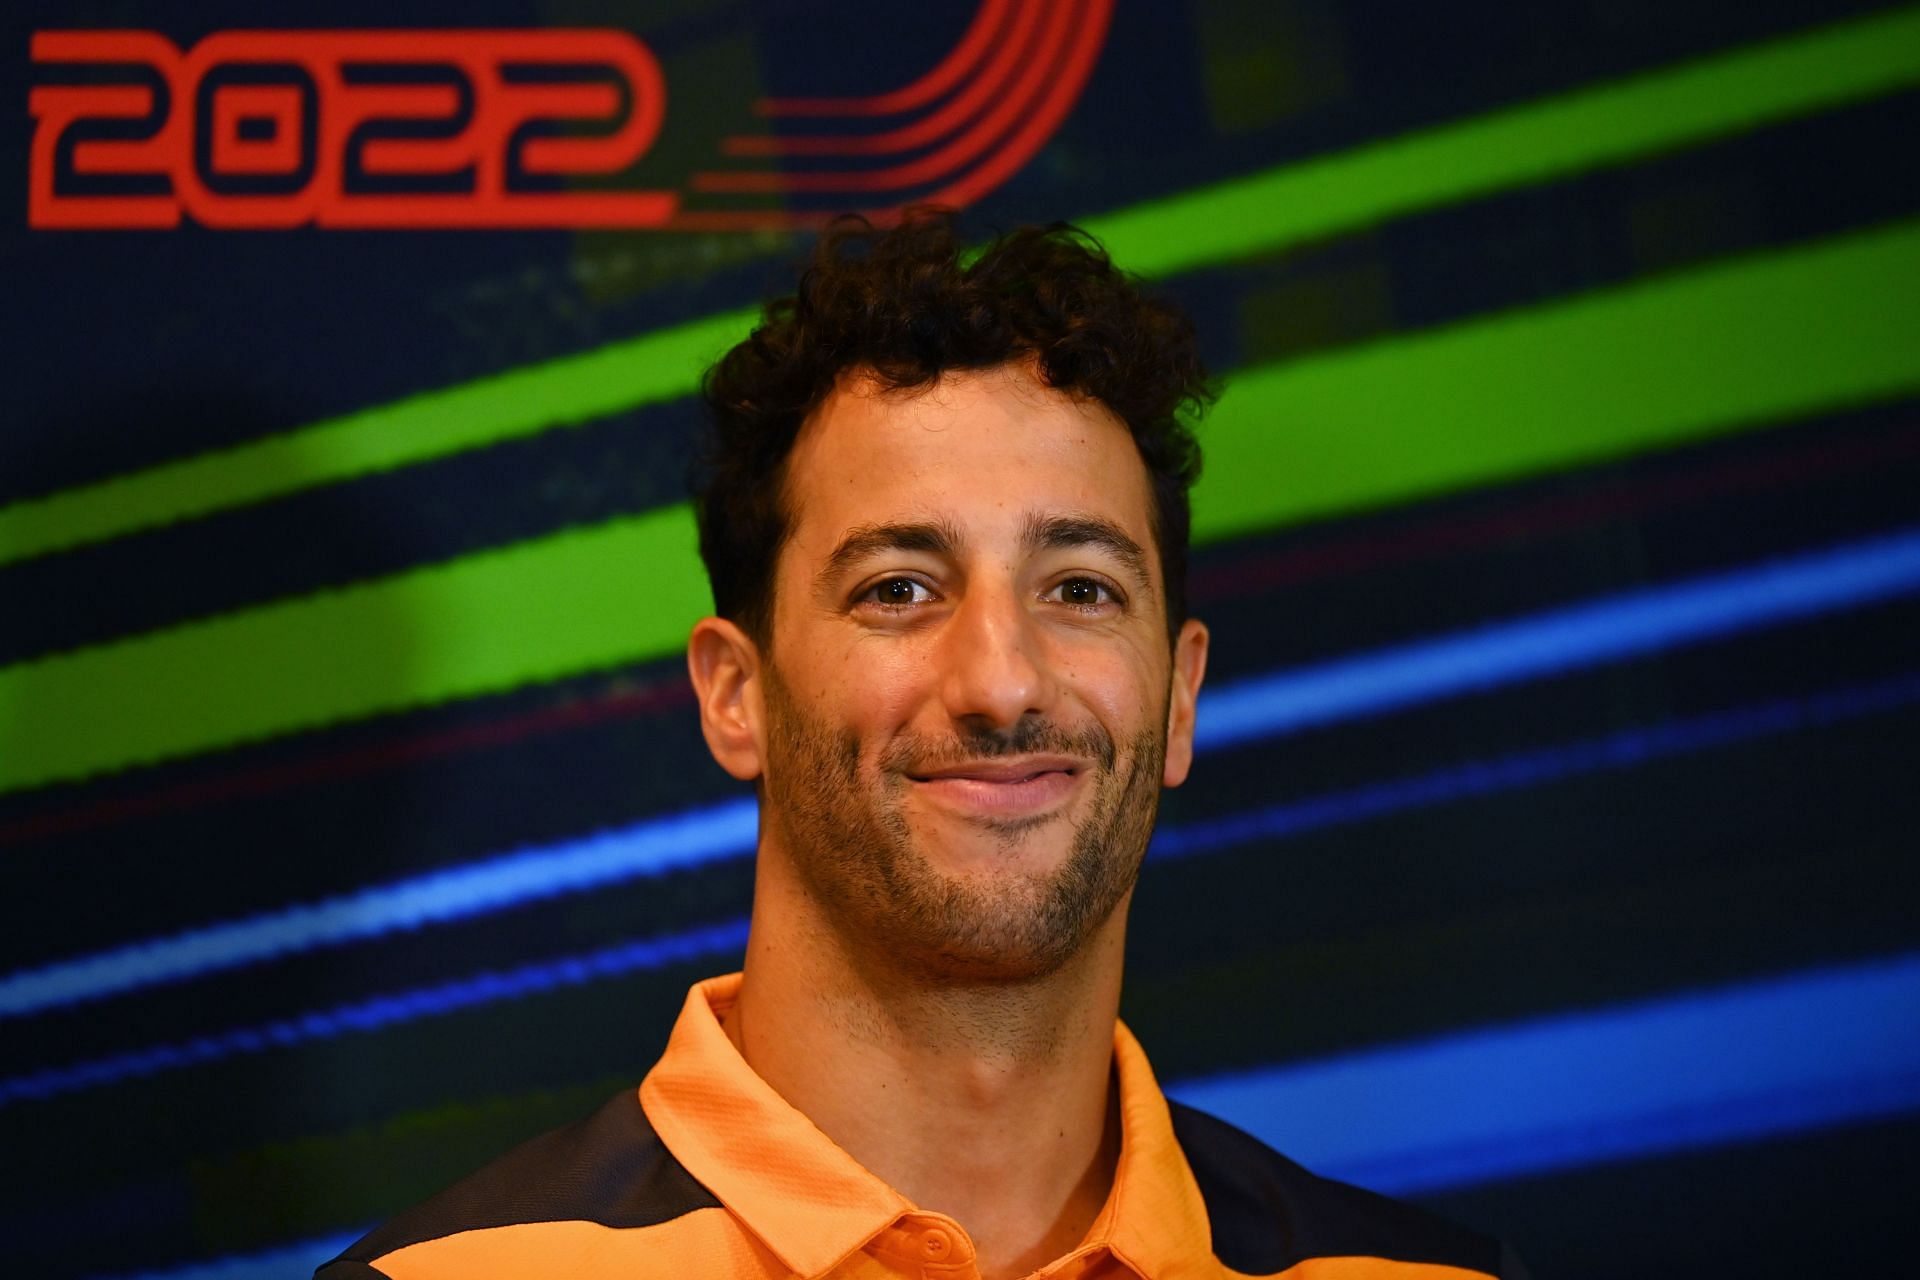 Daniel Ricciardo at the F1 Grand Prix of Azerbaijan - Practice